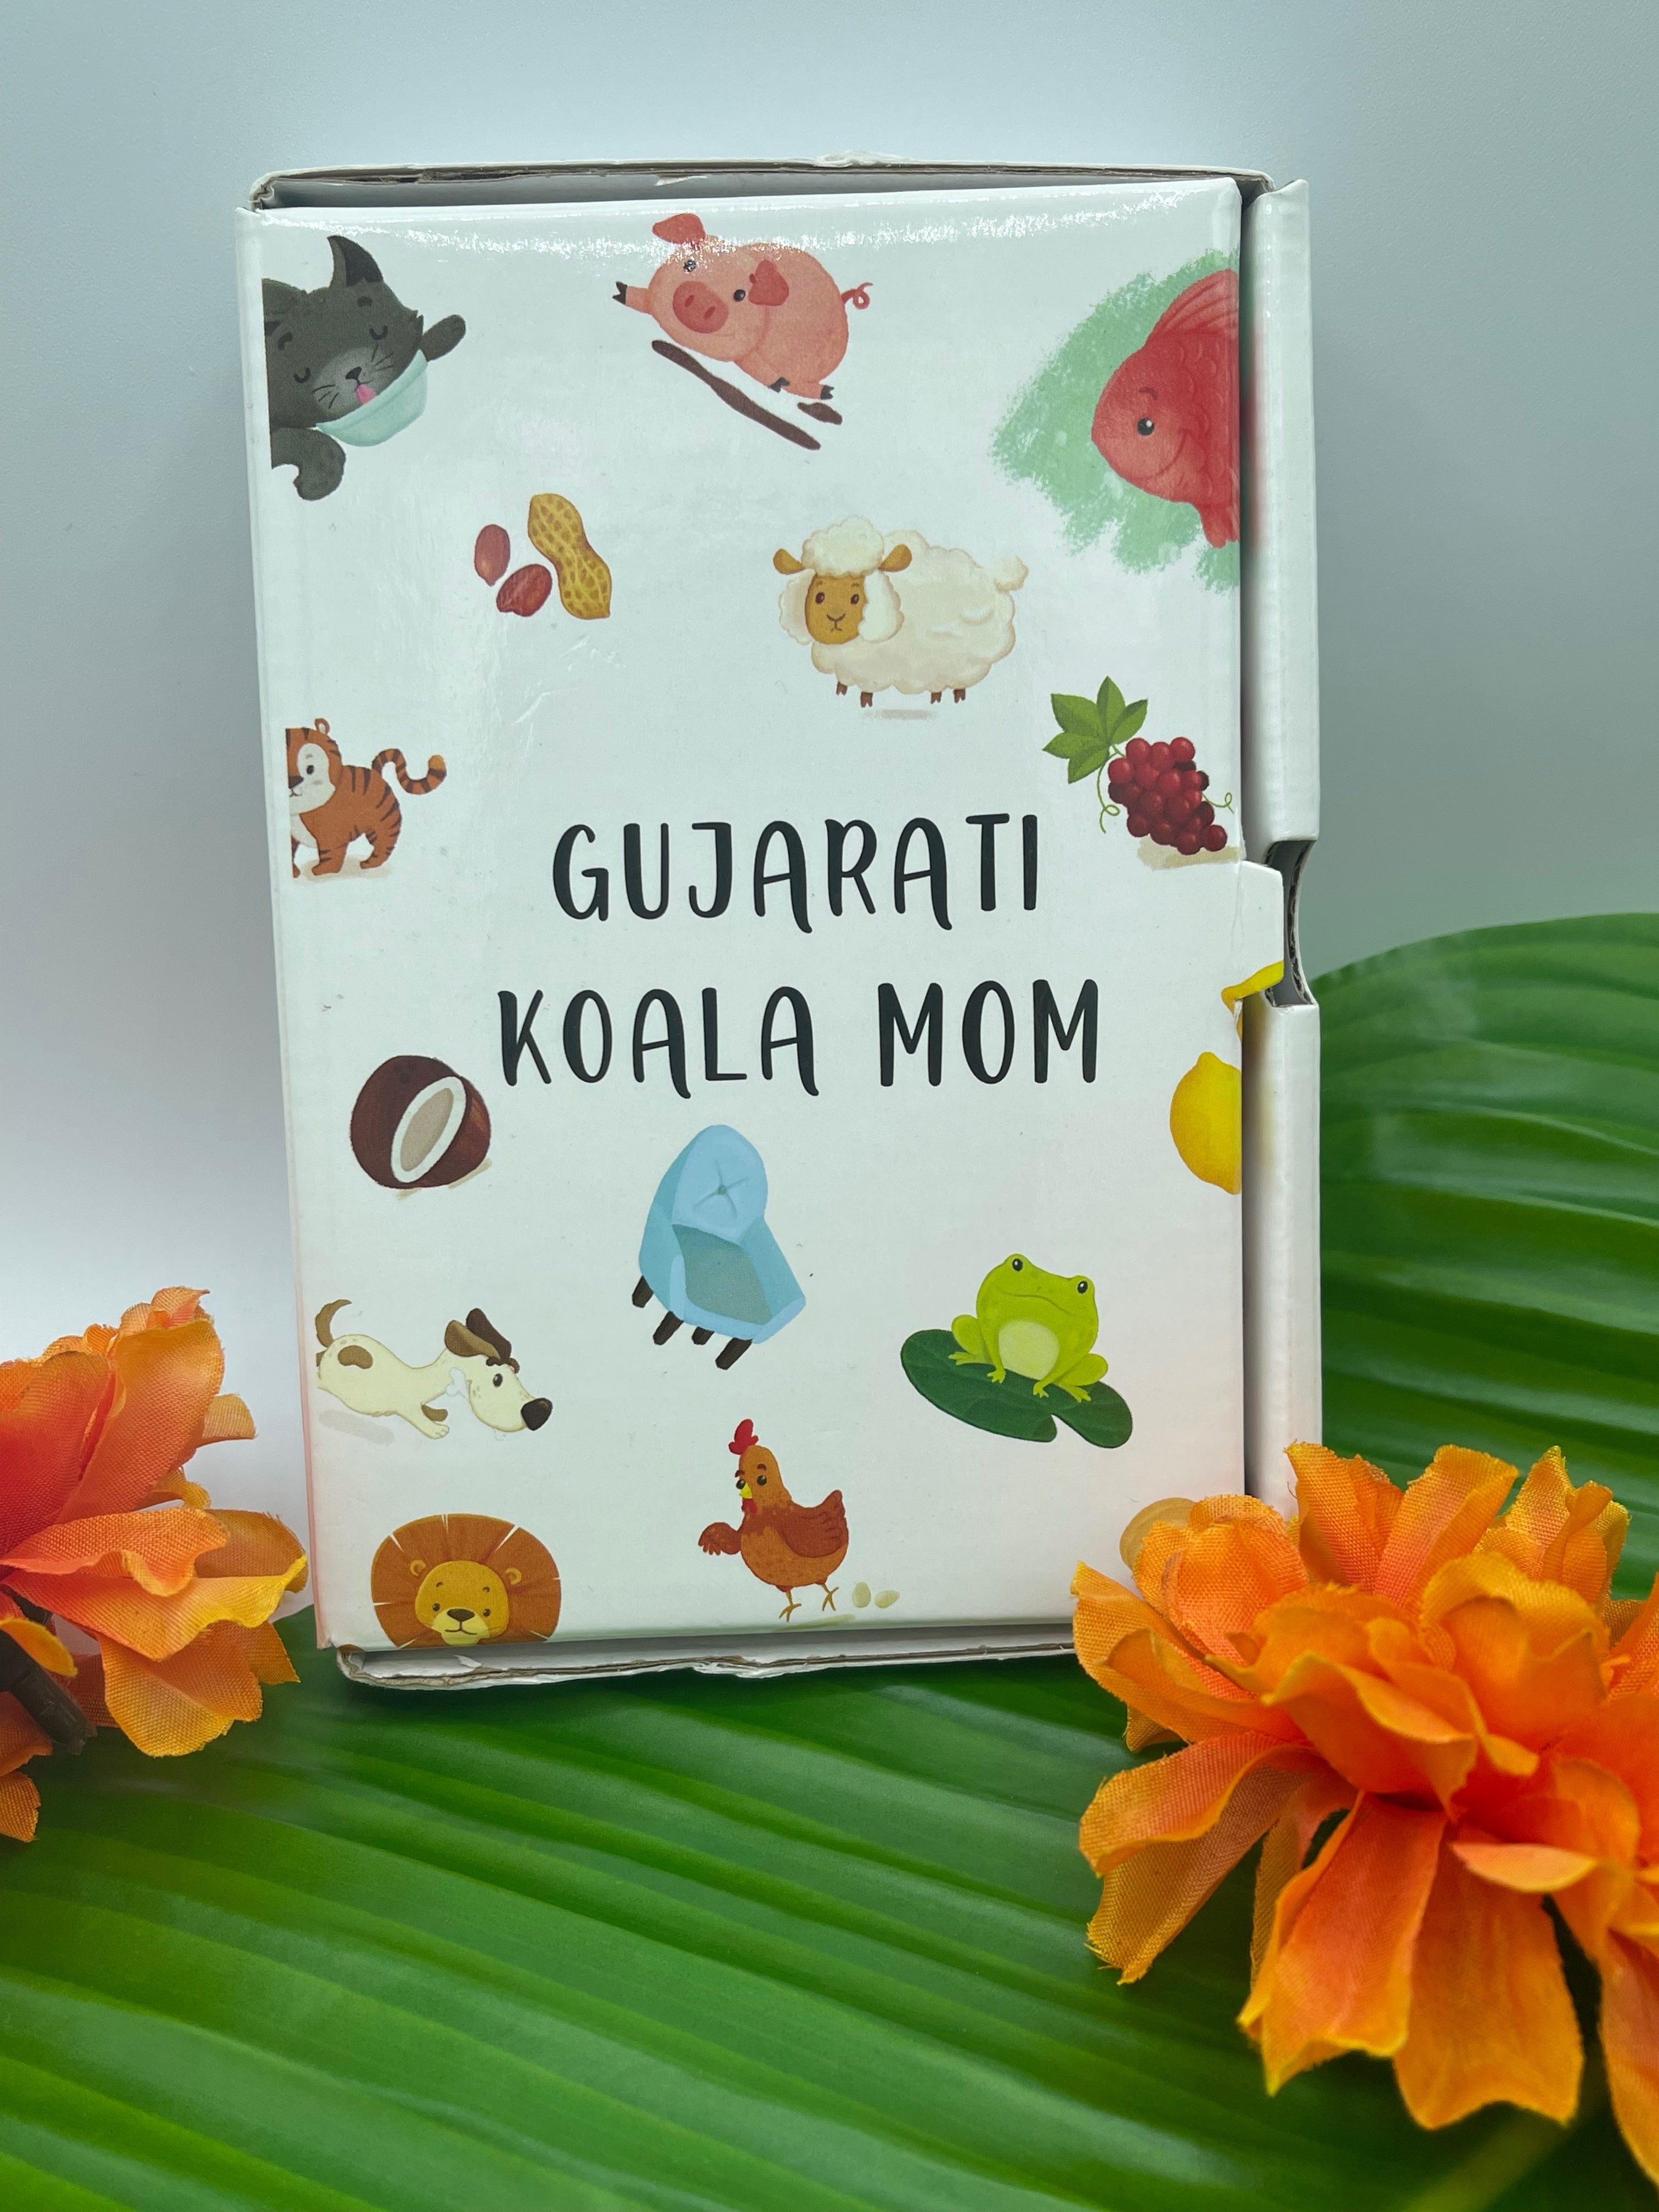 Gujarati Koala Mom Flashcards (Hindi-English) - BhashaKids